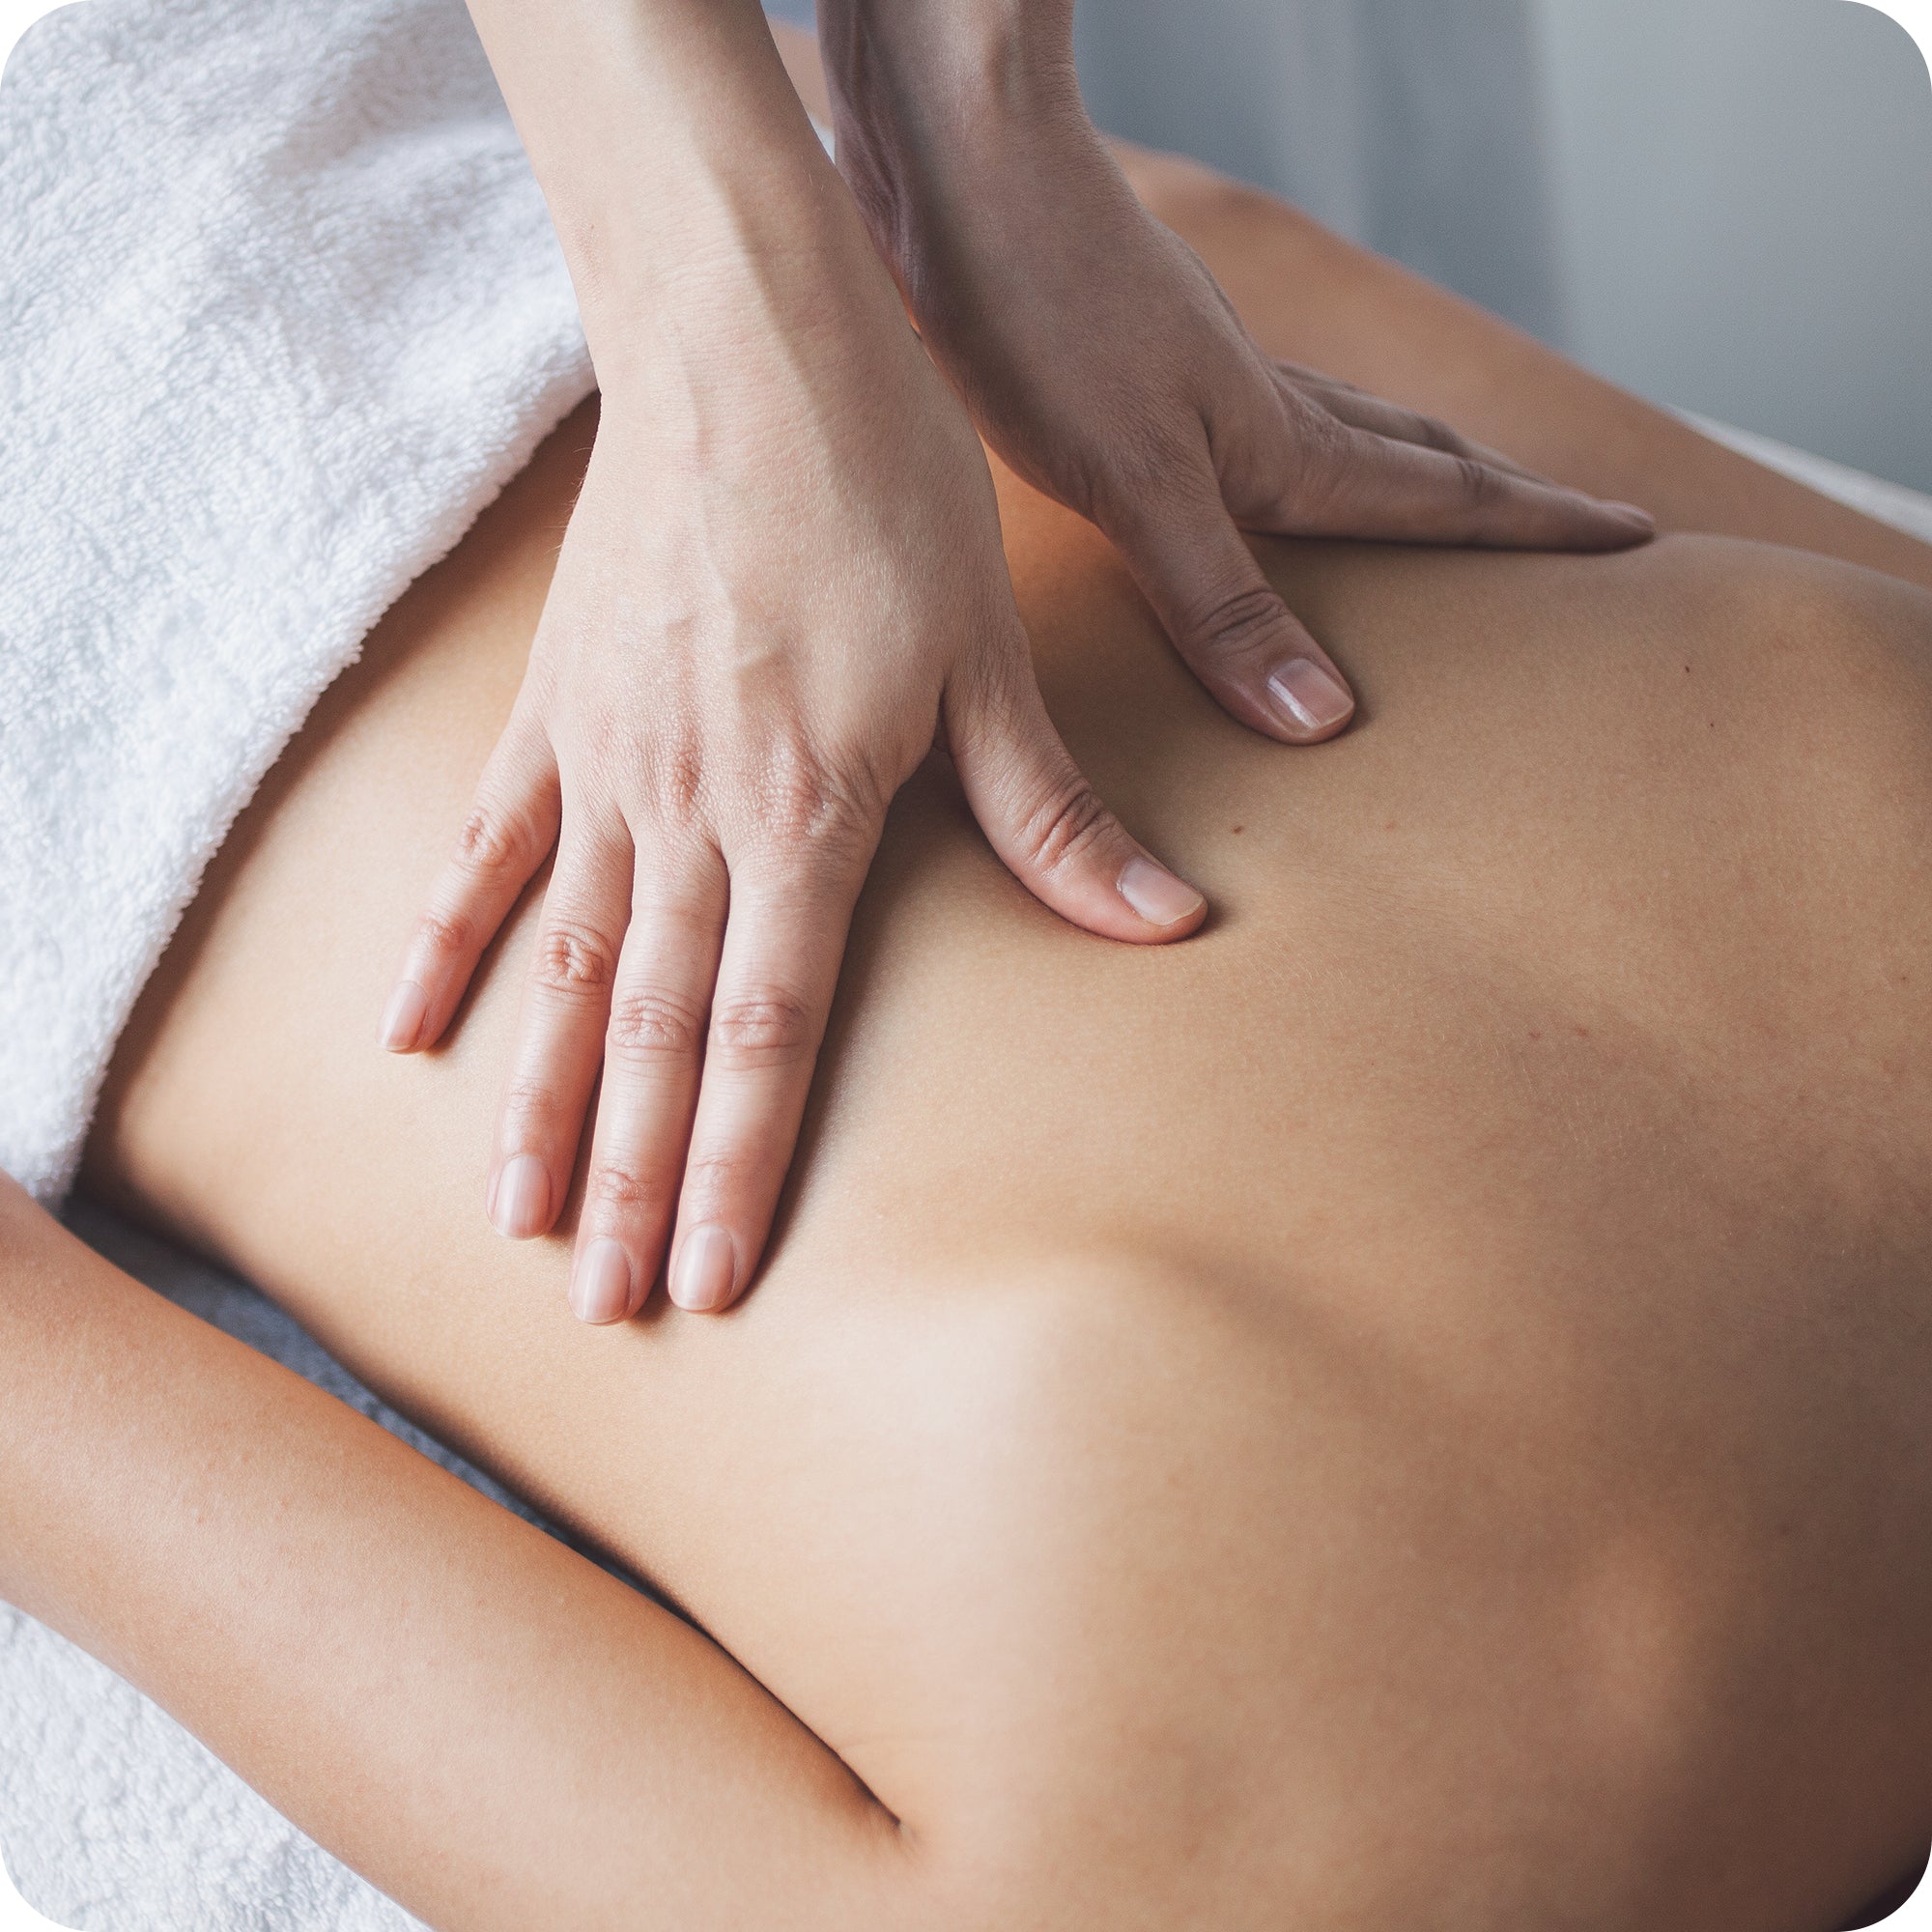 professional masseur giving shiatsu massage on the back muscles